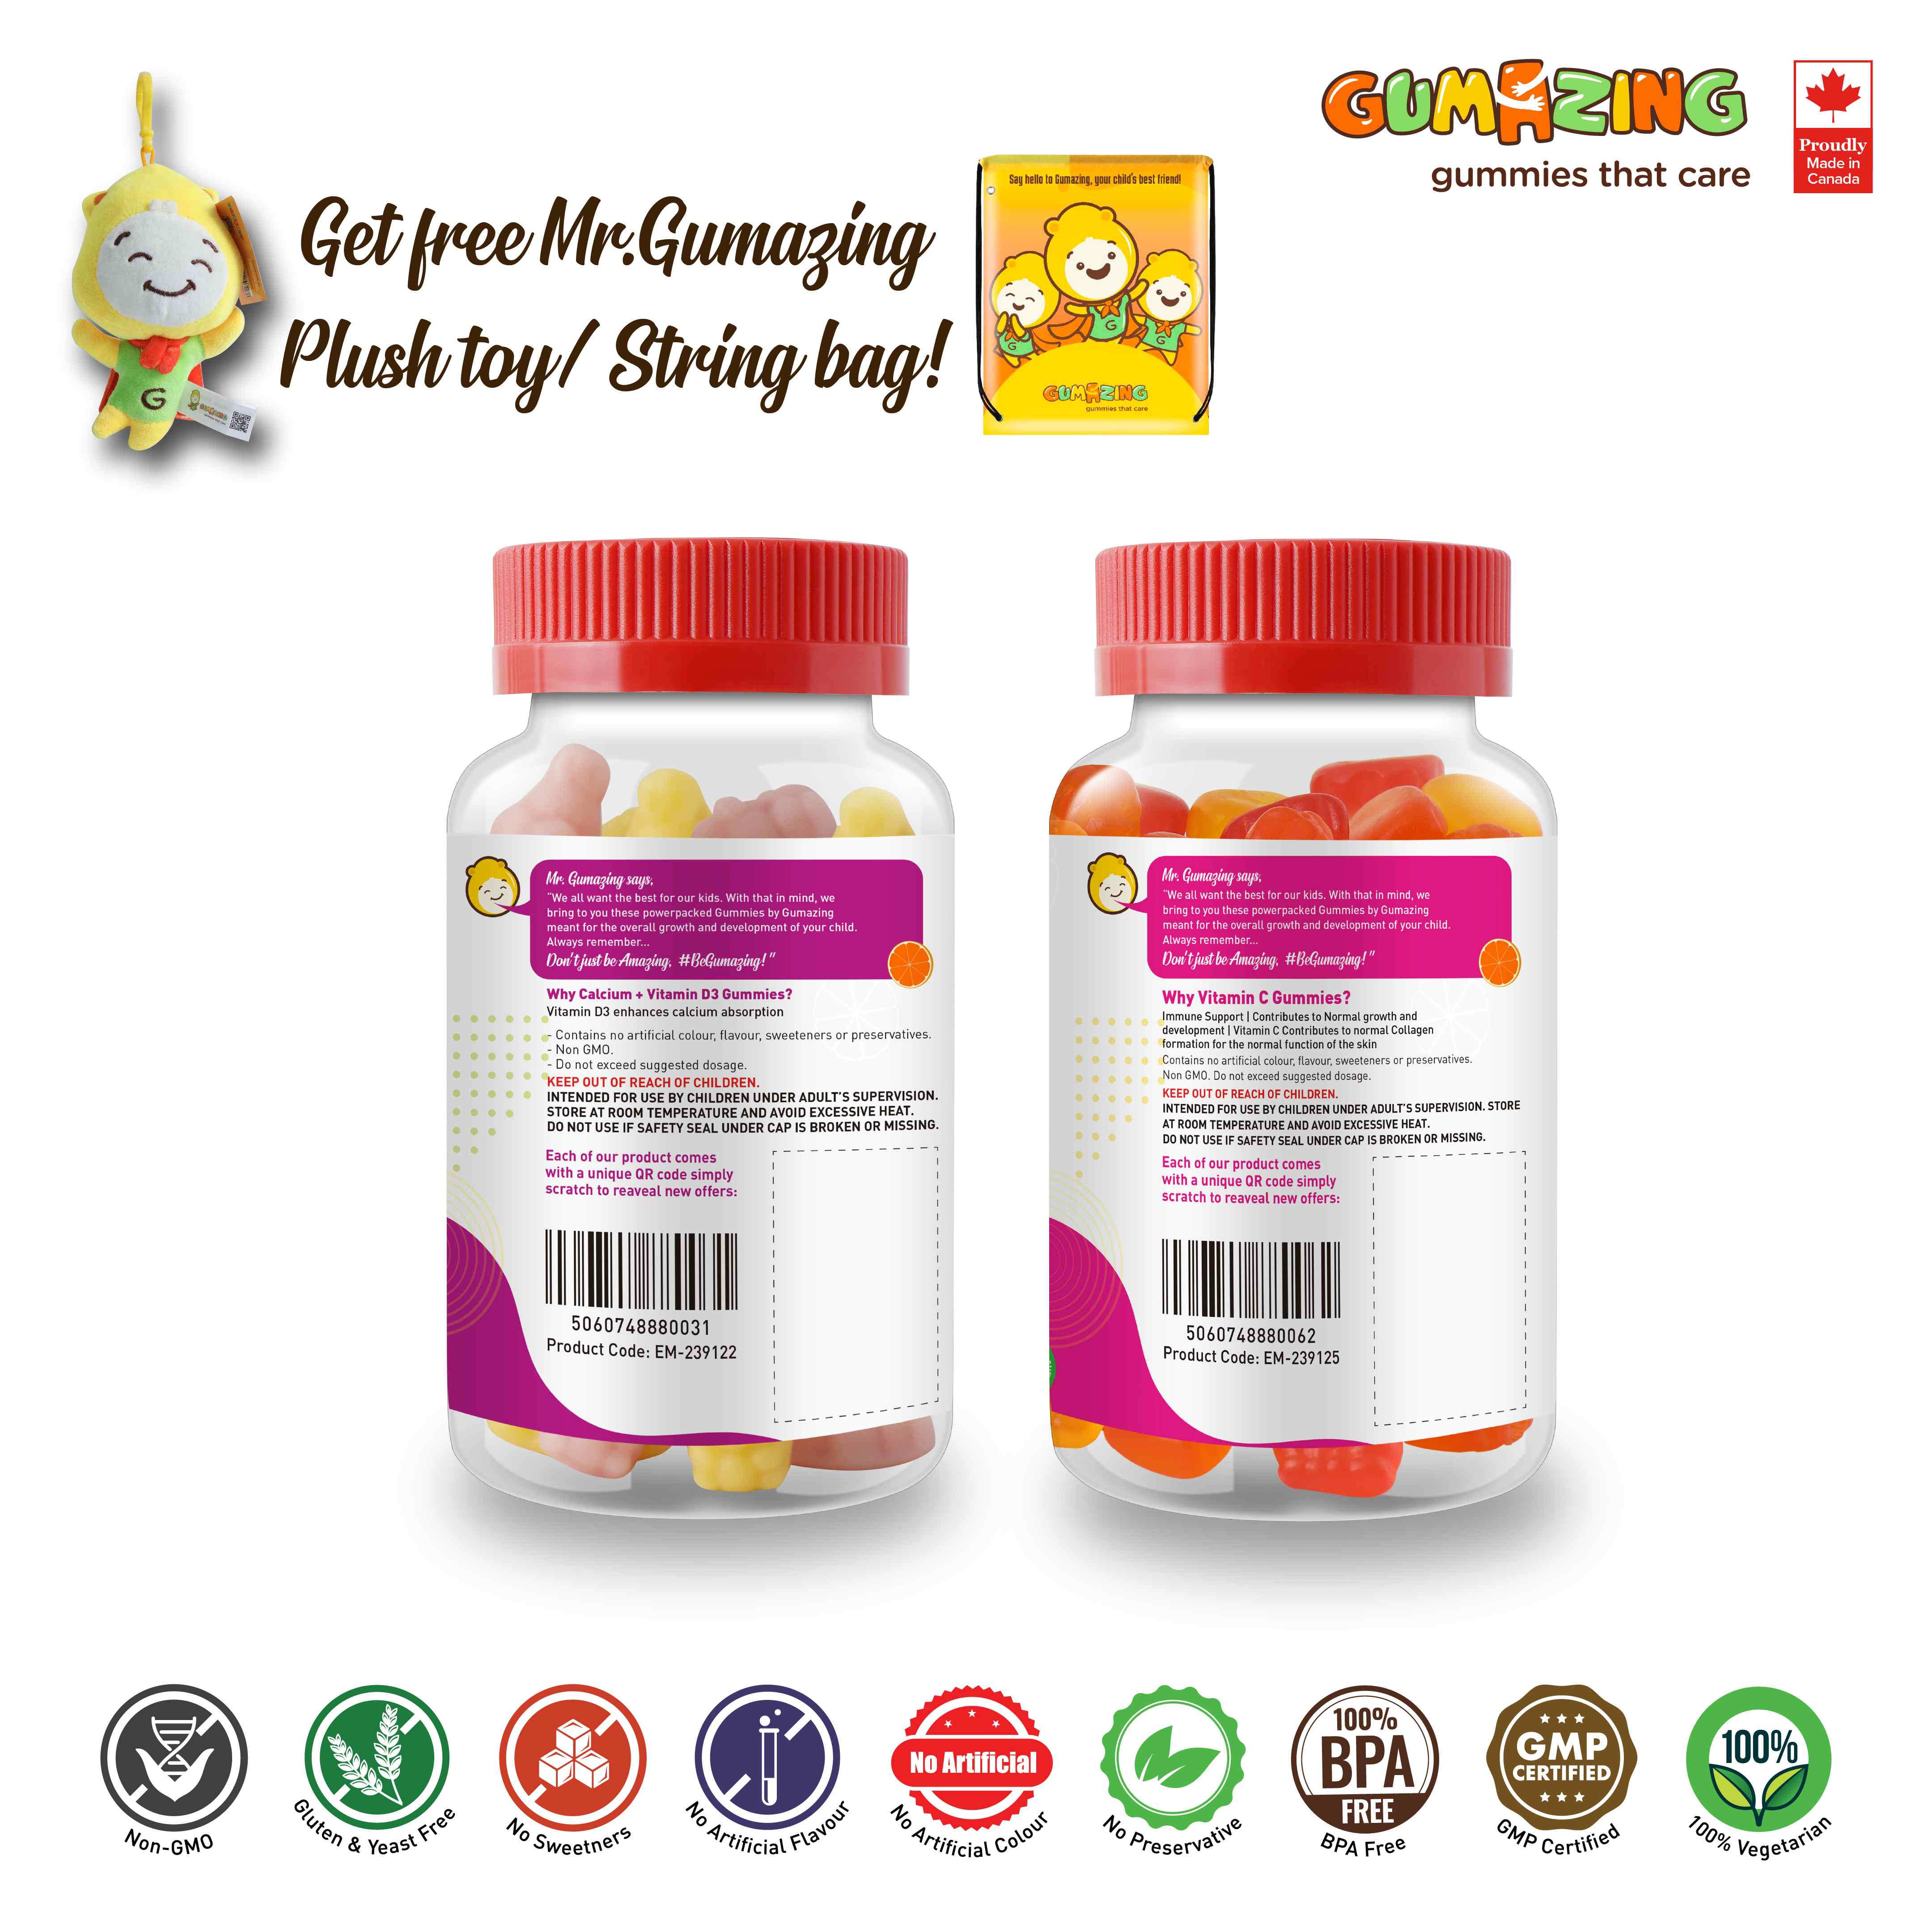 Gumazing Kids Daily Gummy Vitamin Bundle: Calcium + Vitamin D3, Vitamin C + Zinc, 2 Pack Combo, 60 Gummies Each (30 Day Supply)